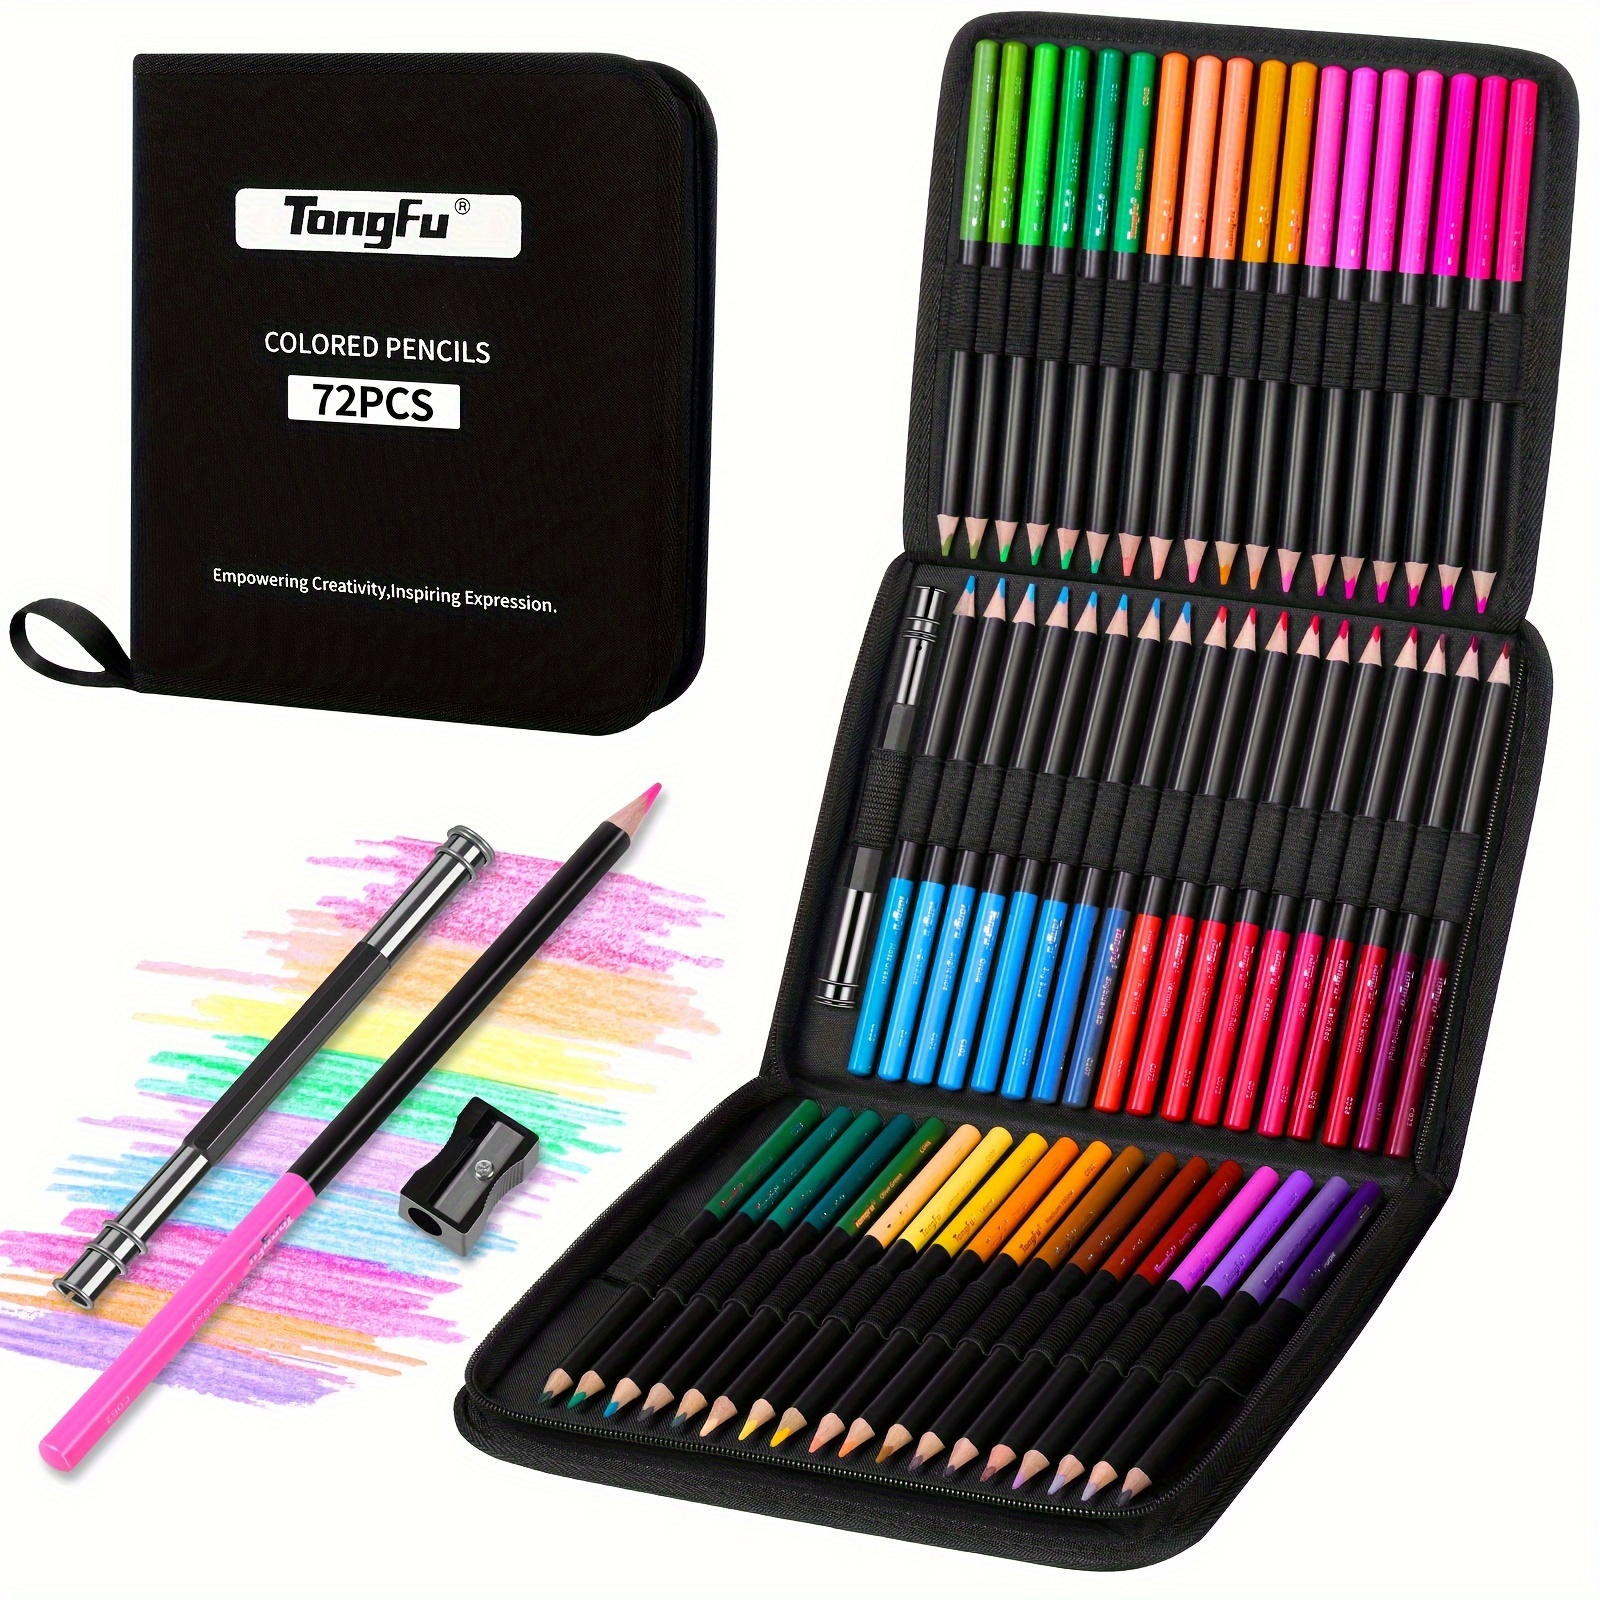 

Tongfu 72 Color Pencil Set, 72 Colored Pencils For Adult Coloring Books, Coloring Pencils For Sketching, Shading, Blending, Drawing Pencils For Adults Beginner, Artist Coloring